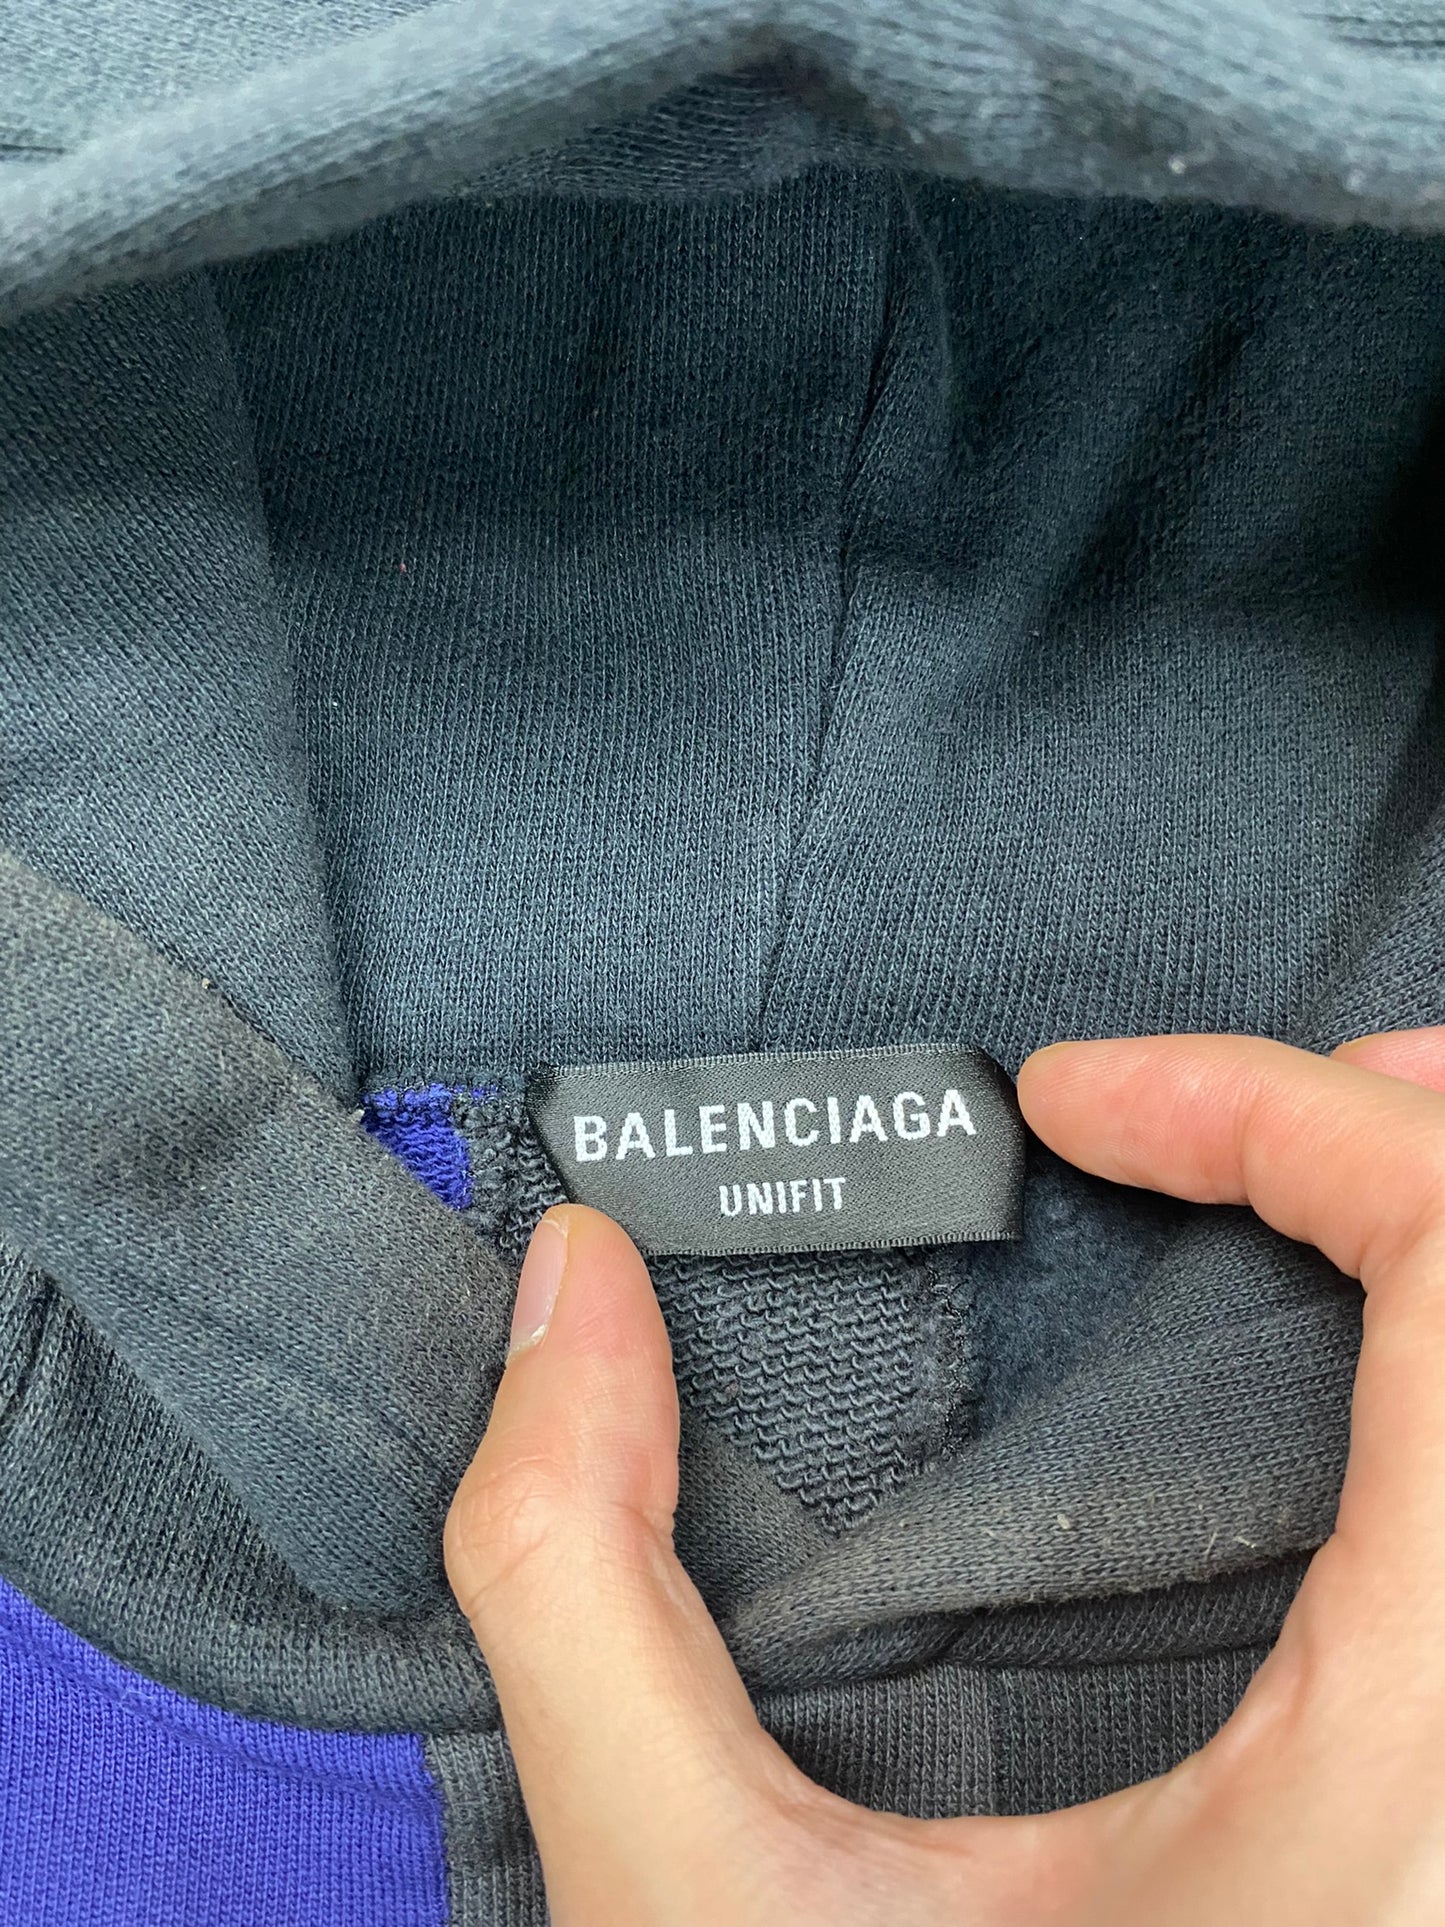 Balenciaga cut up patchwork hoodie multicolor logos SZ:XS